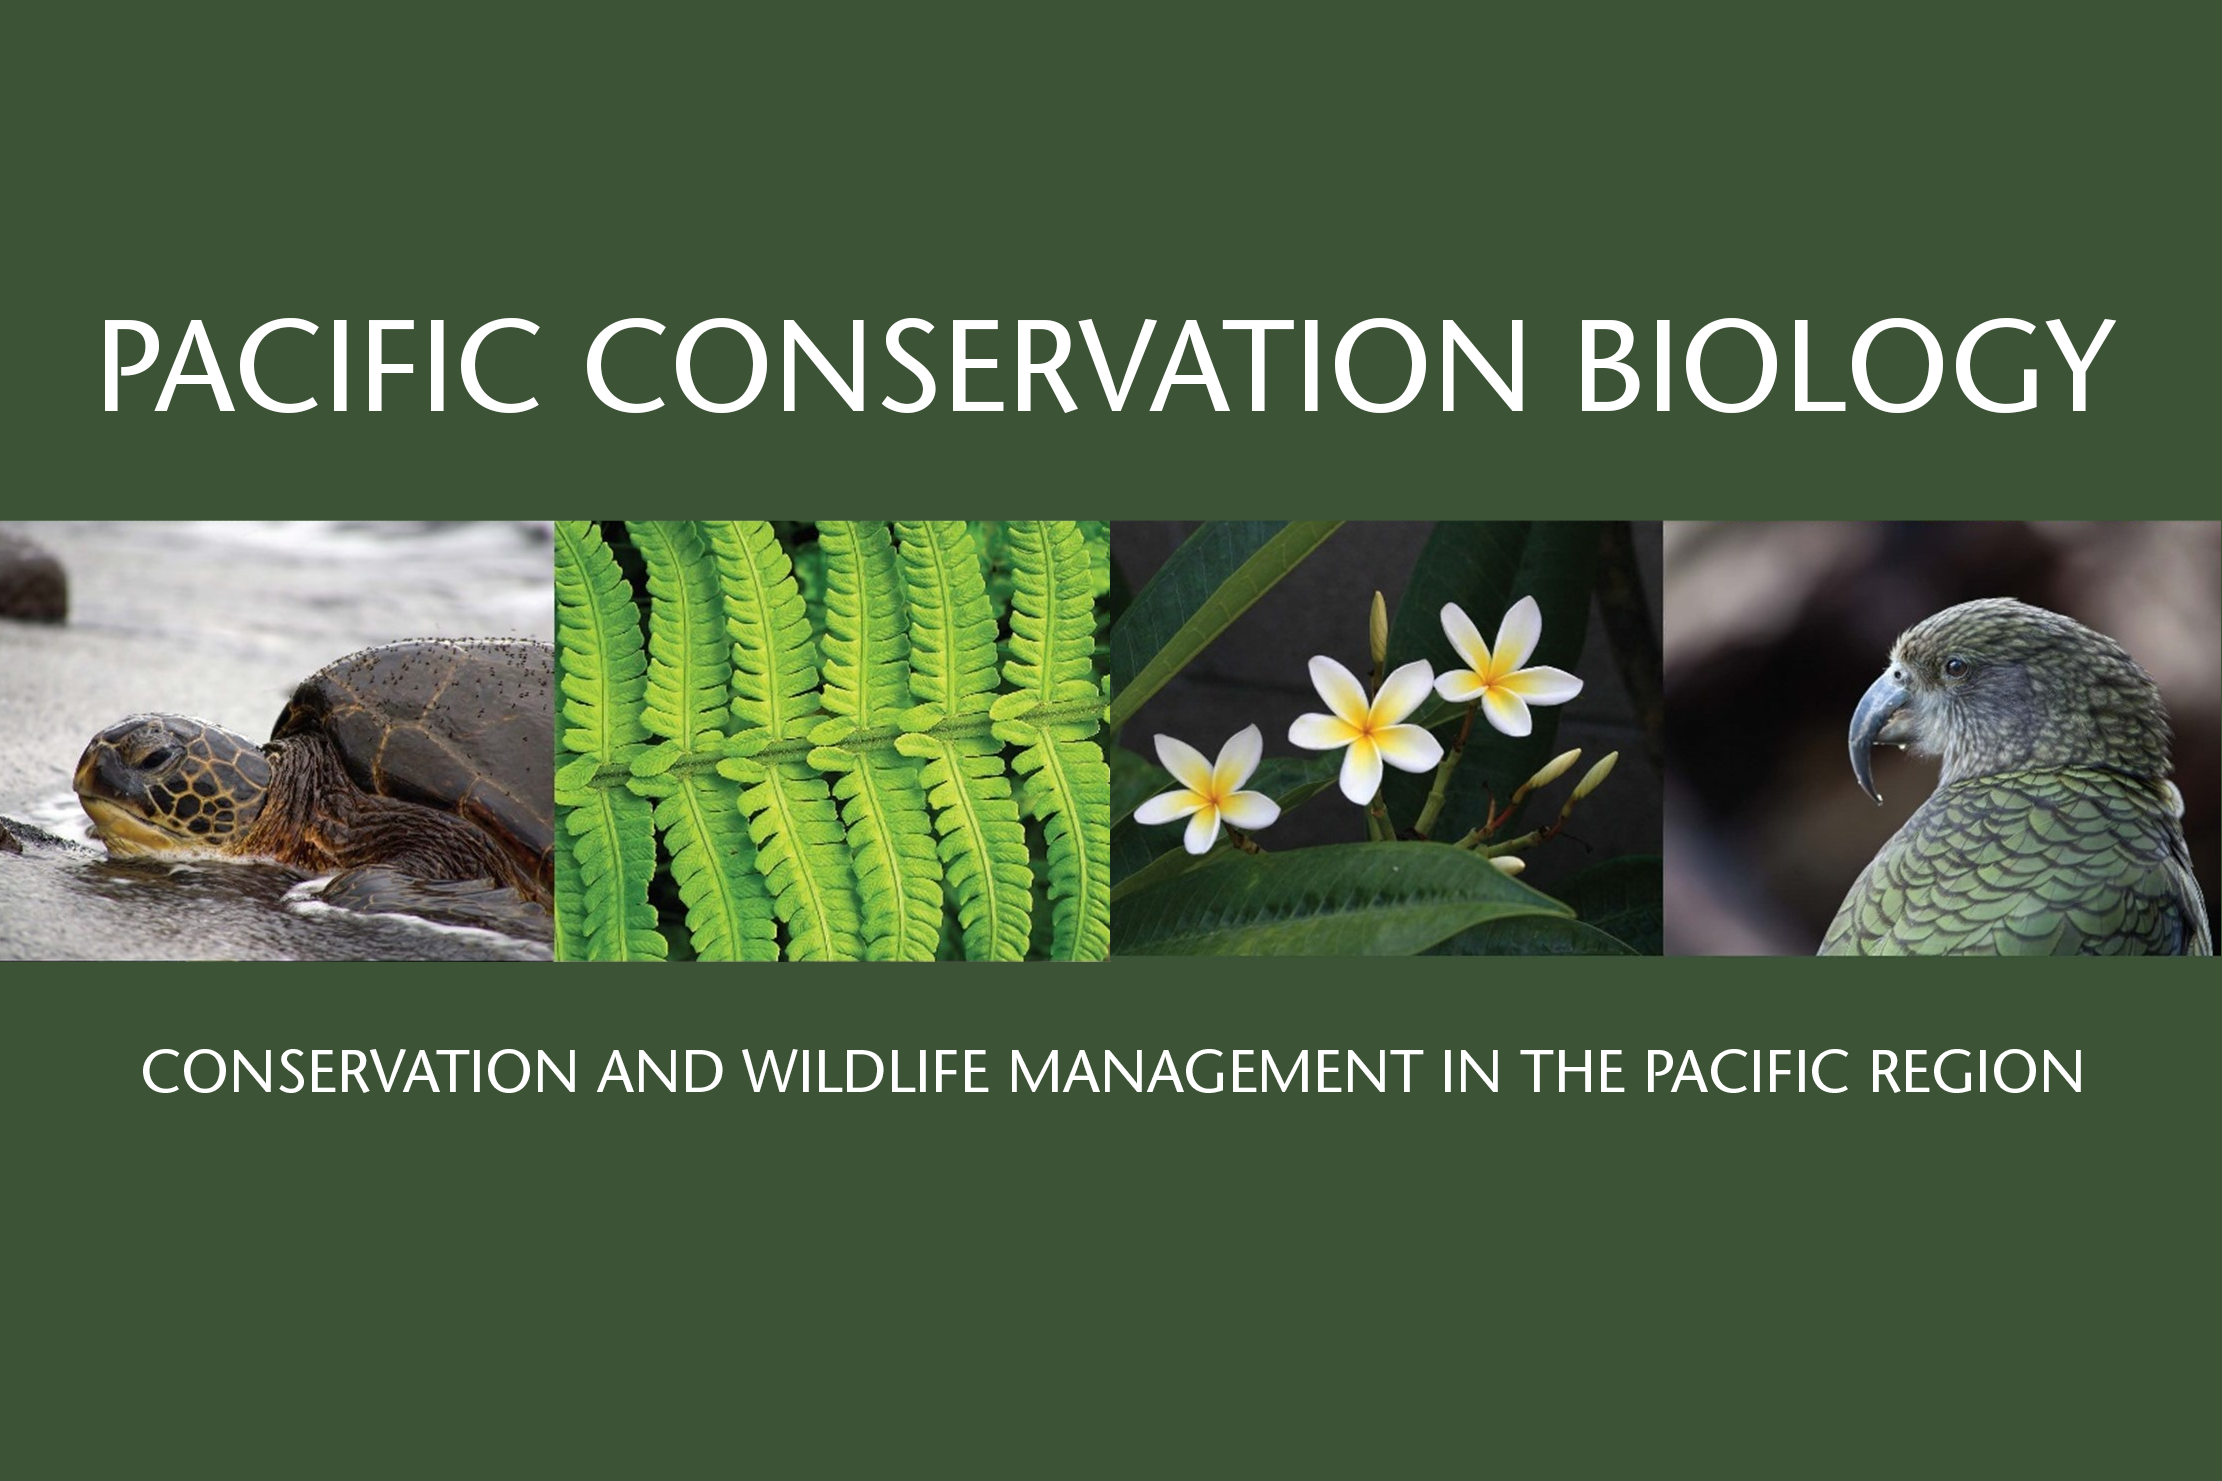 Pacific Conservation Biology seeking a Social Media Editor